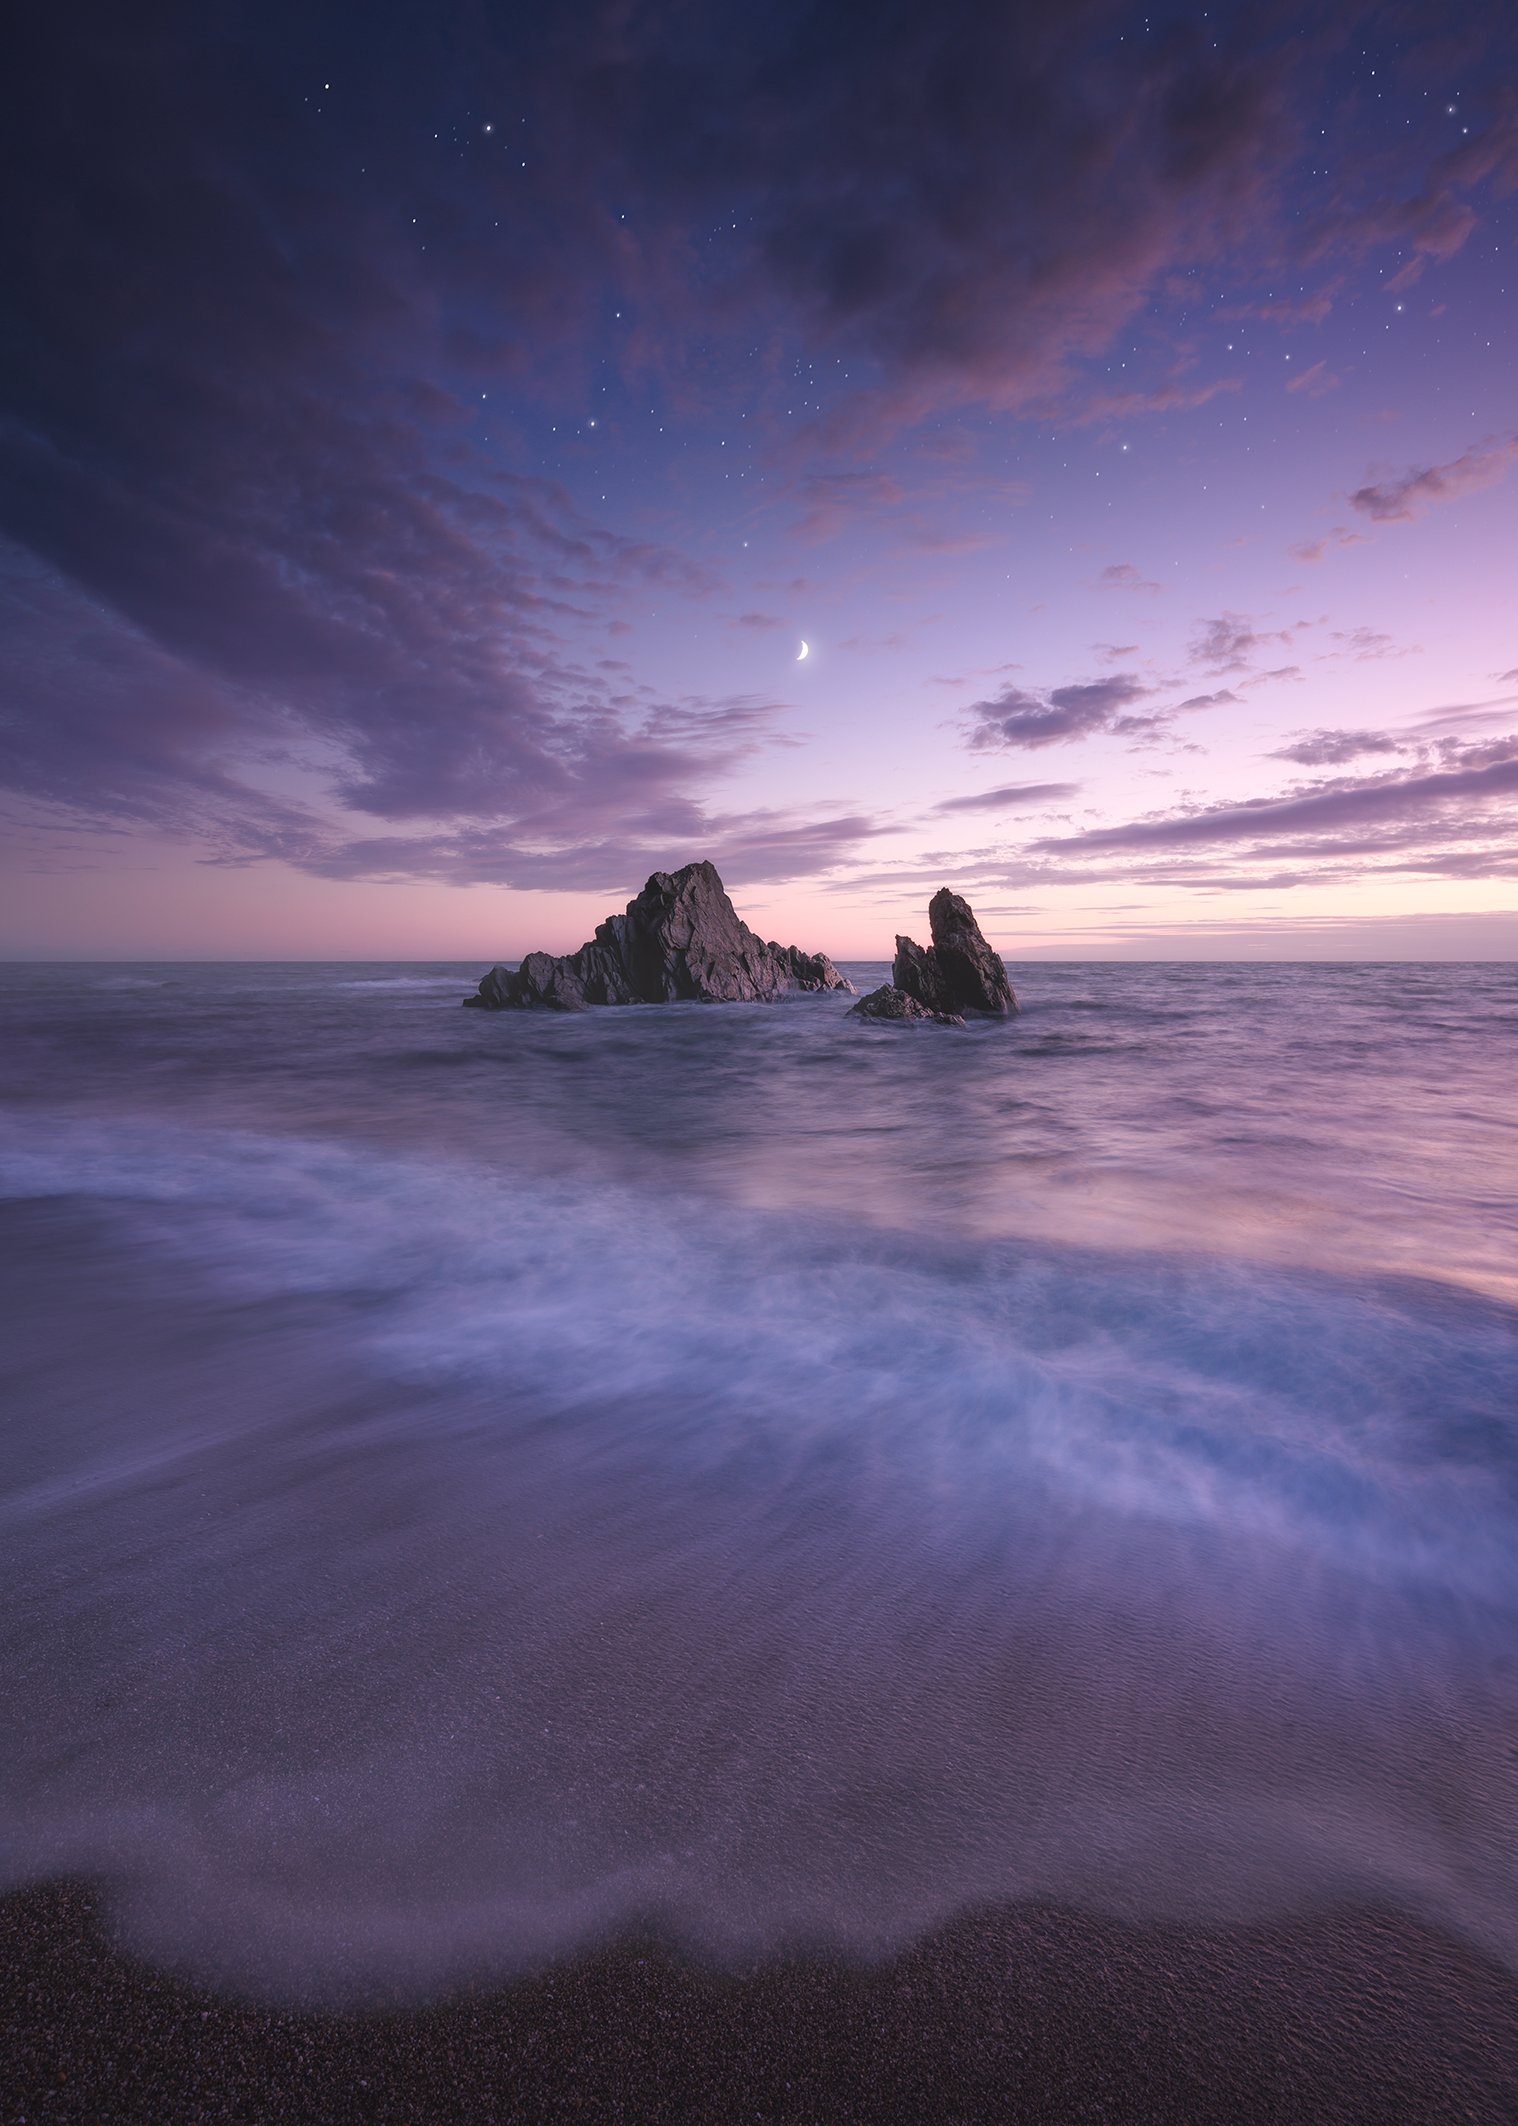 Nature Landscape Sea Waves Beach Sand Moon Sunset Rocks Portrait Display Clouds Stars 1518x2126